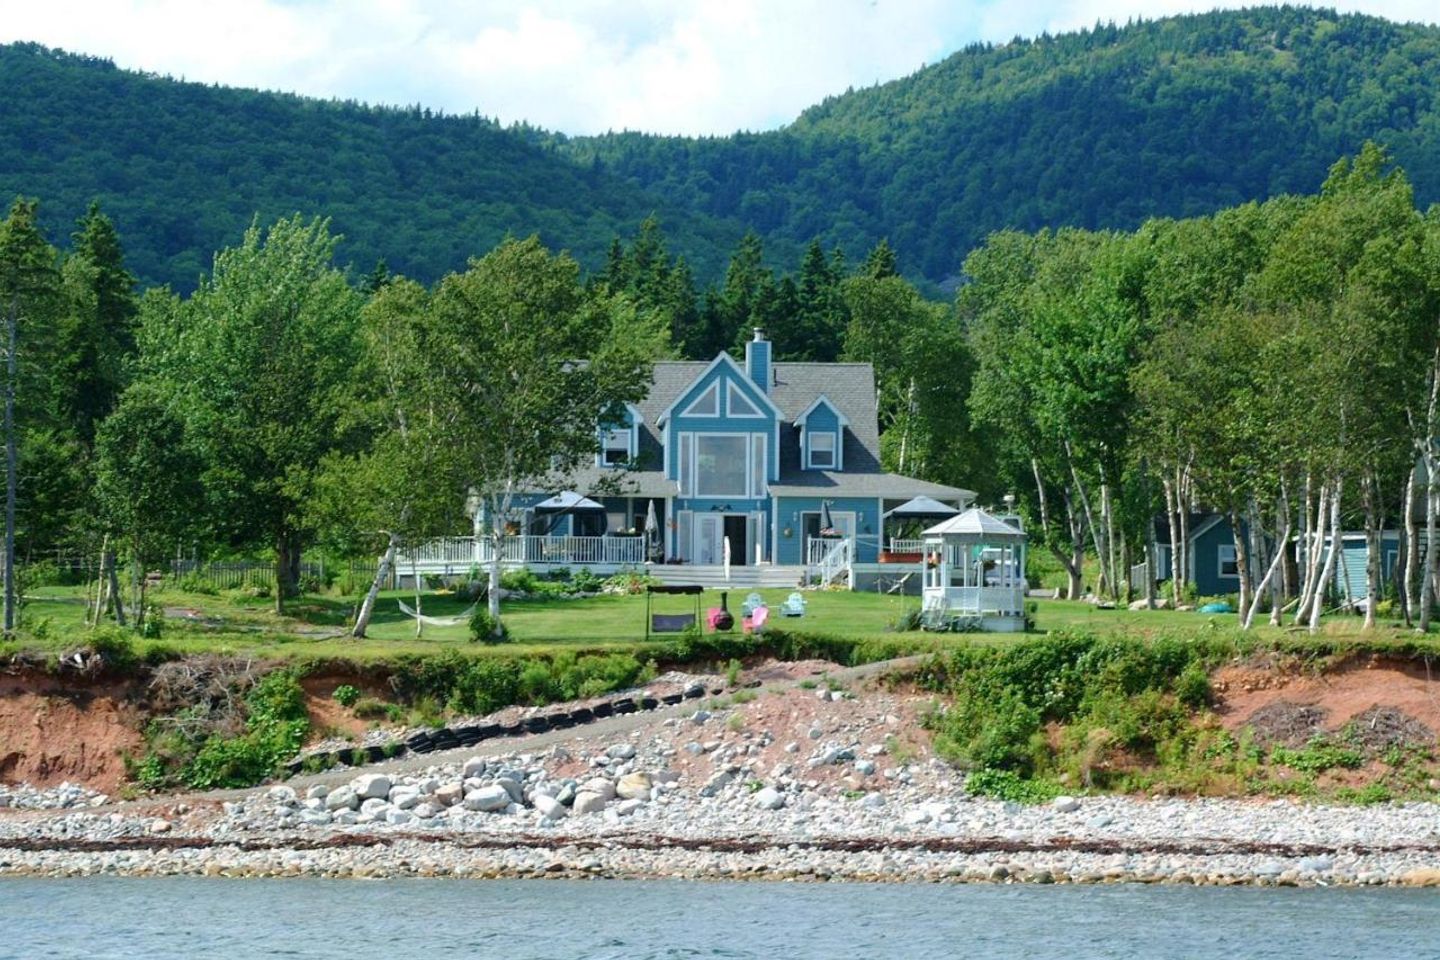 Sea Parrot Ocean View Manor For Sale In Englishtown Nova Scotia Canada., Cape Breton Island, Nova Scotia, Canada